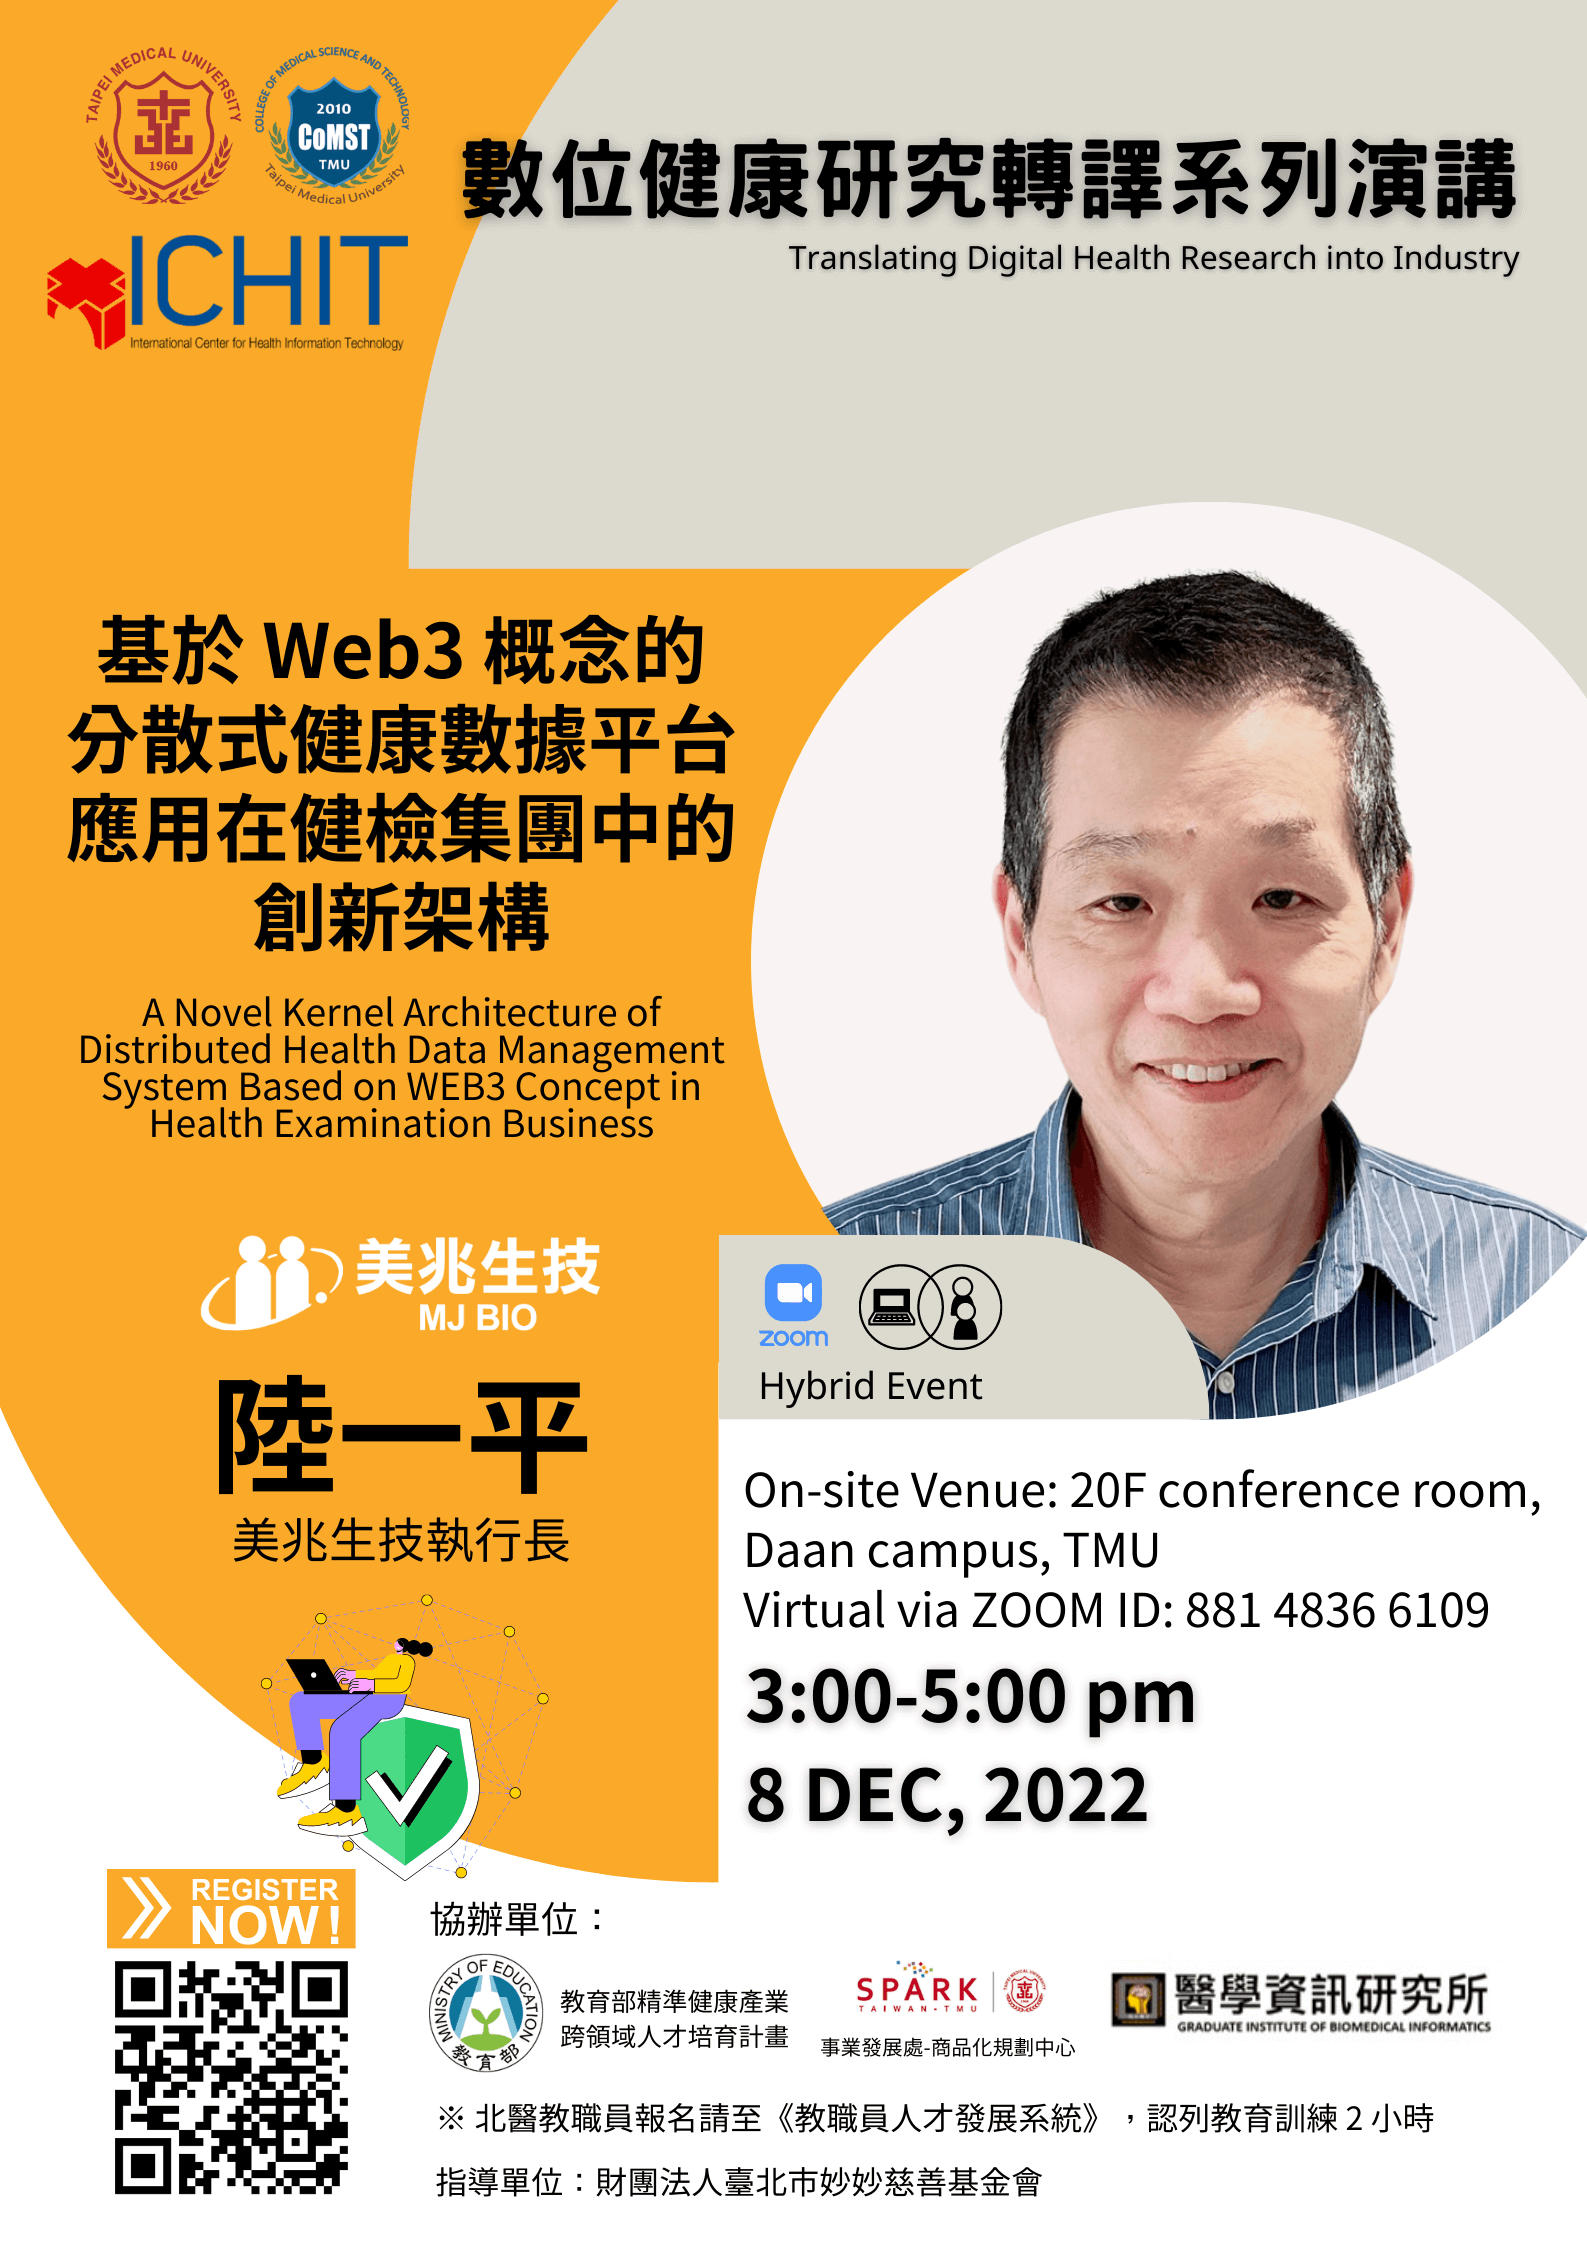 邀請到 國內預防醫學龍頭- 美兆 MJLIFE 集團 生技事業 陸一平執行長 (Dr.Yih-Ping Luh) 分享講題「基於 Web3 概念的分散式健康數據平台應用在健檢集團中的創新架構 (A Novel Kernel Architecture of Distributed Health Data Management System Based on WEB3 Concept in Health Examination Business)」。